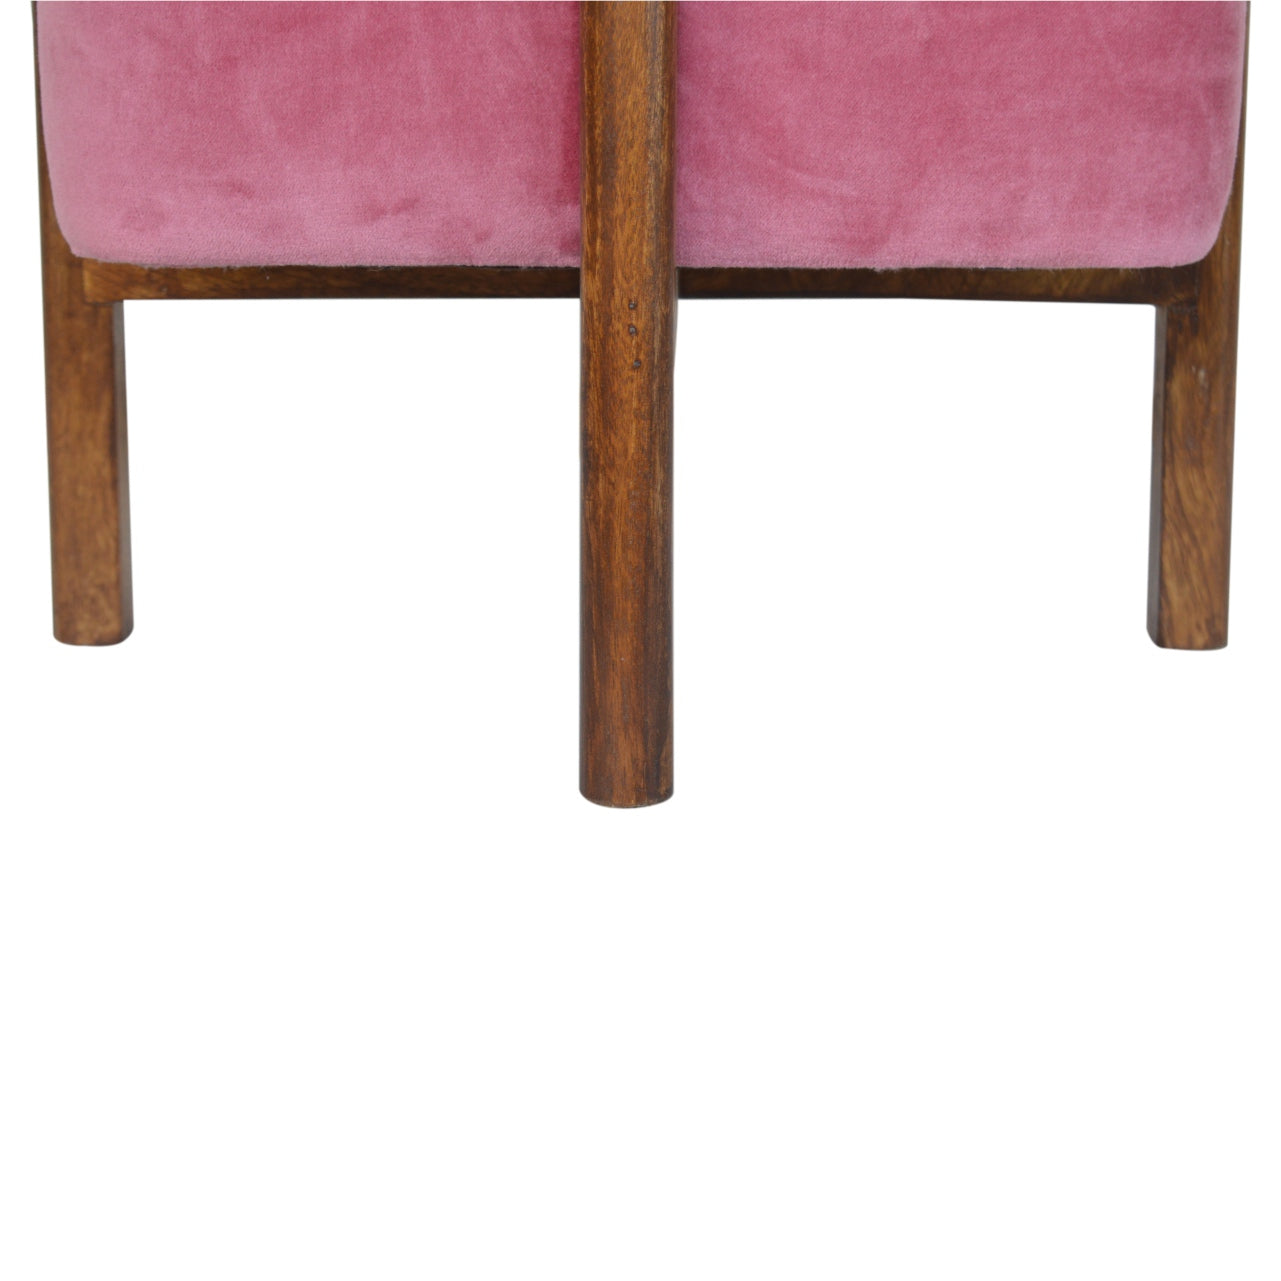 Pink Velvet Footstool with Solid Wood Legs